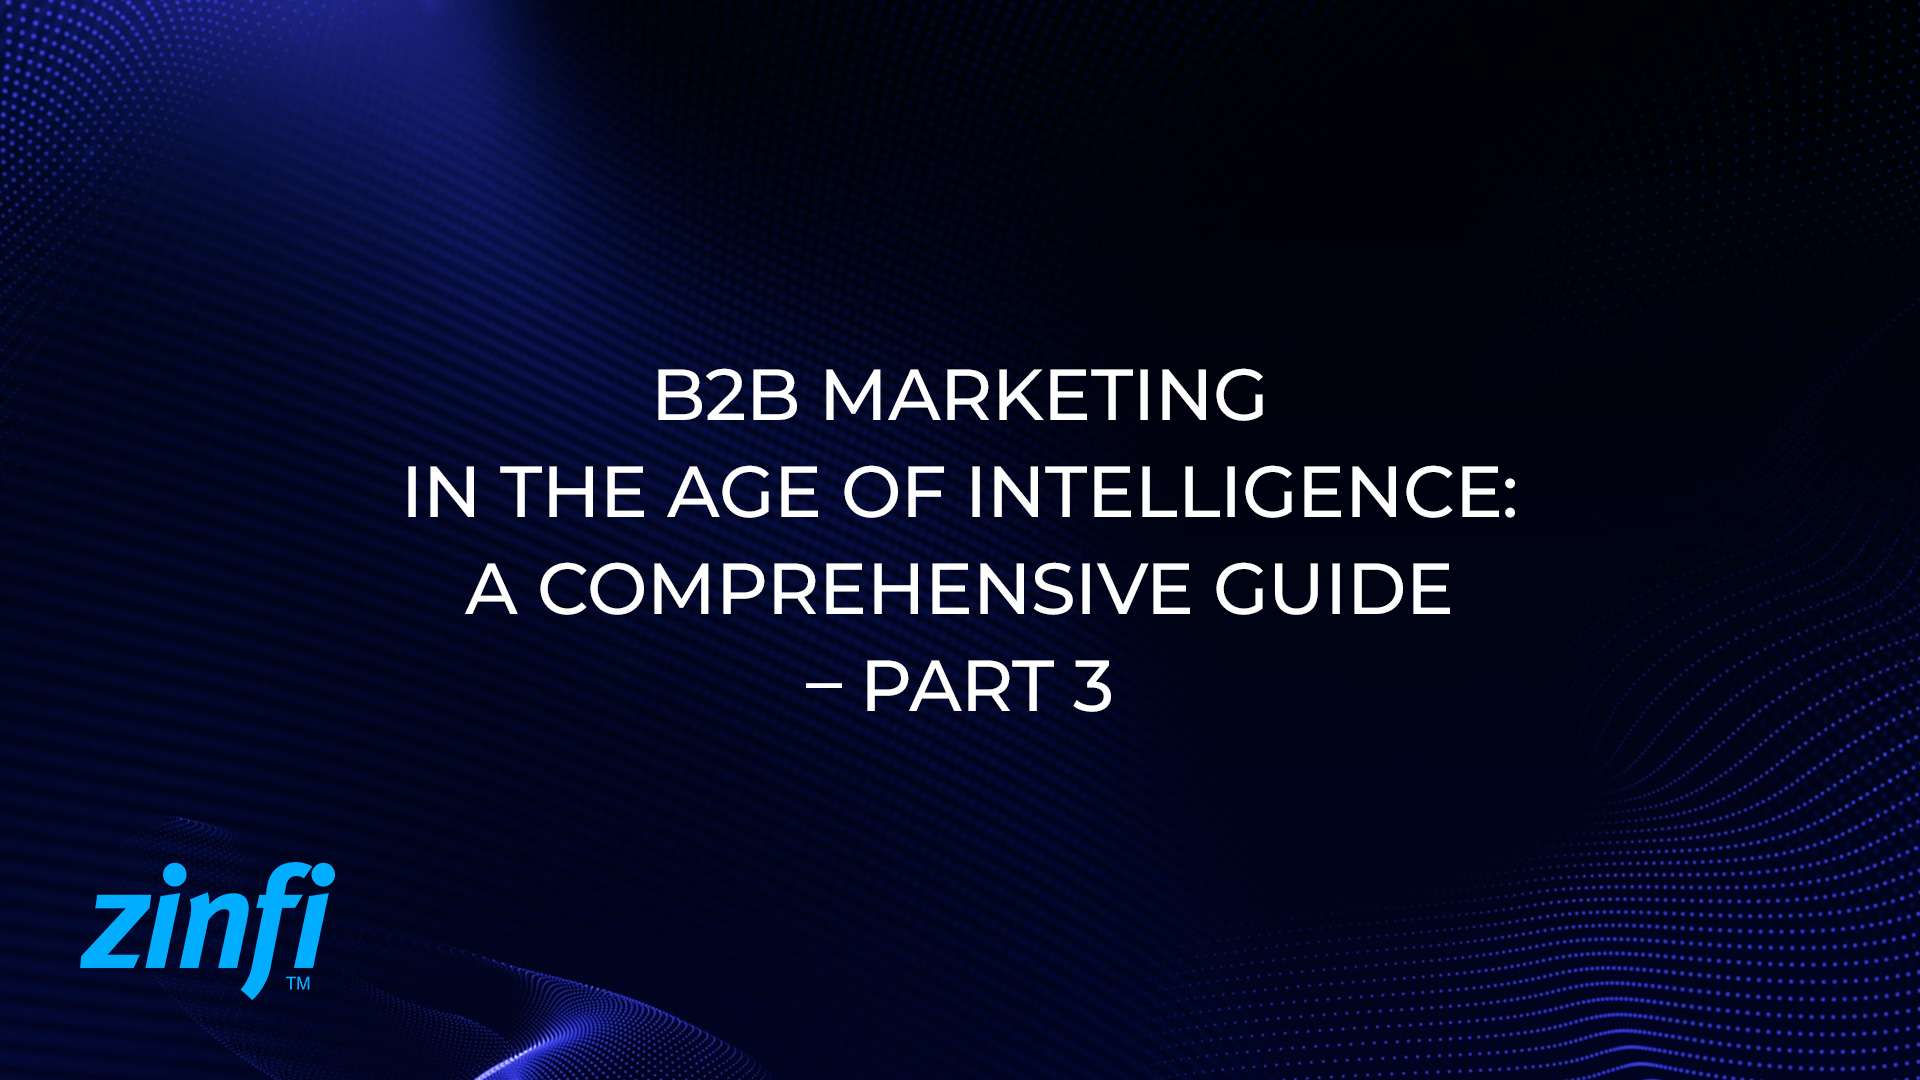 B2B Marketing Video thumbnail part 3